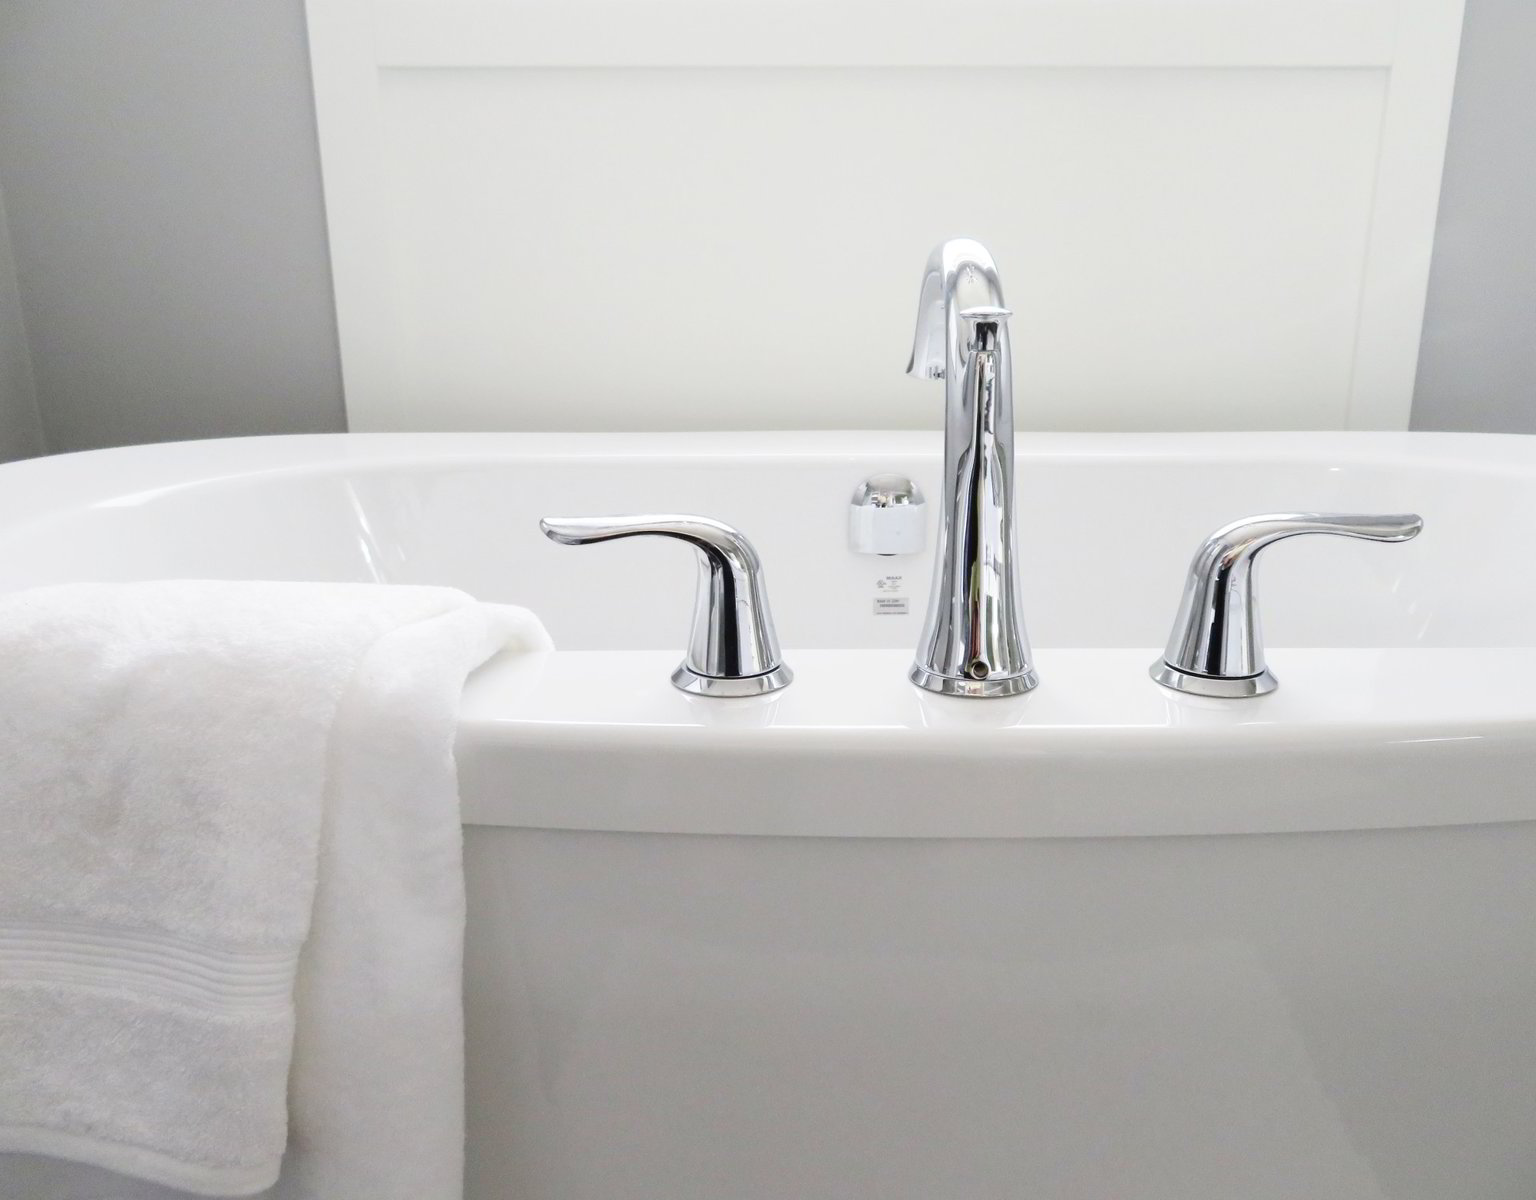 How To Fix A Leaky Bathtub Faucet, Bathtub Spigot Repair